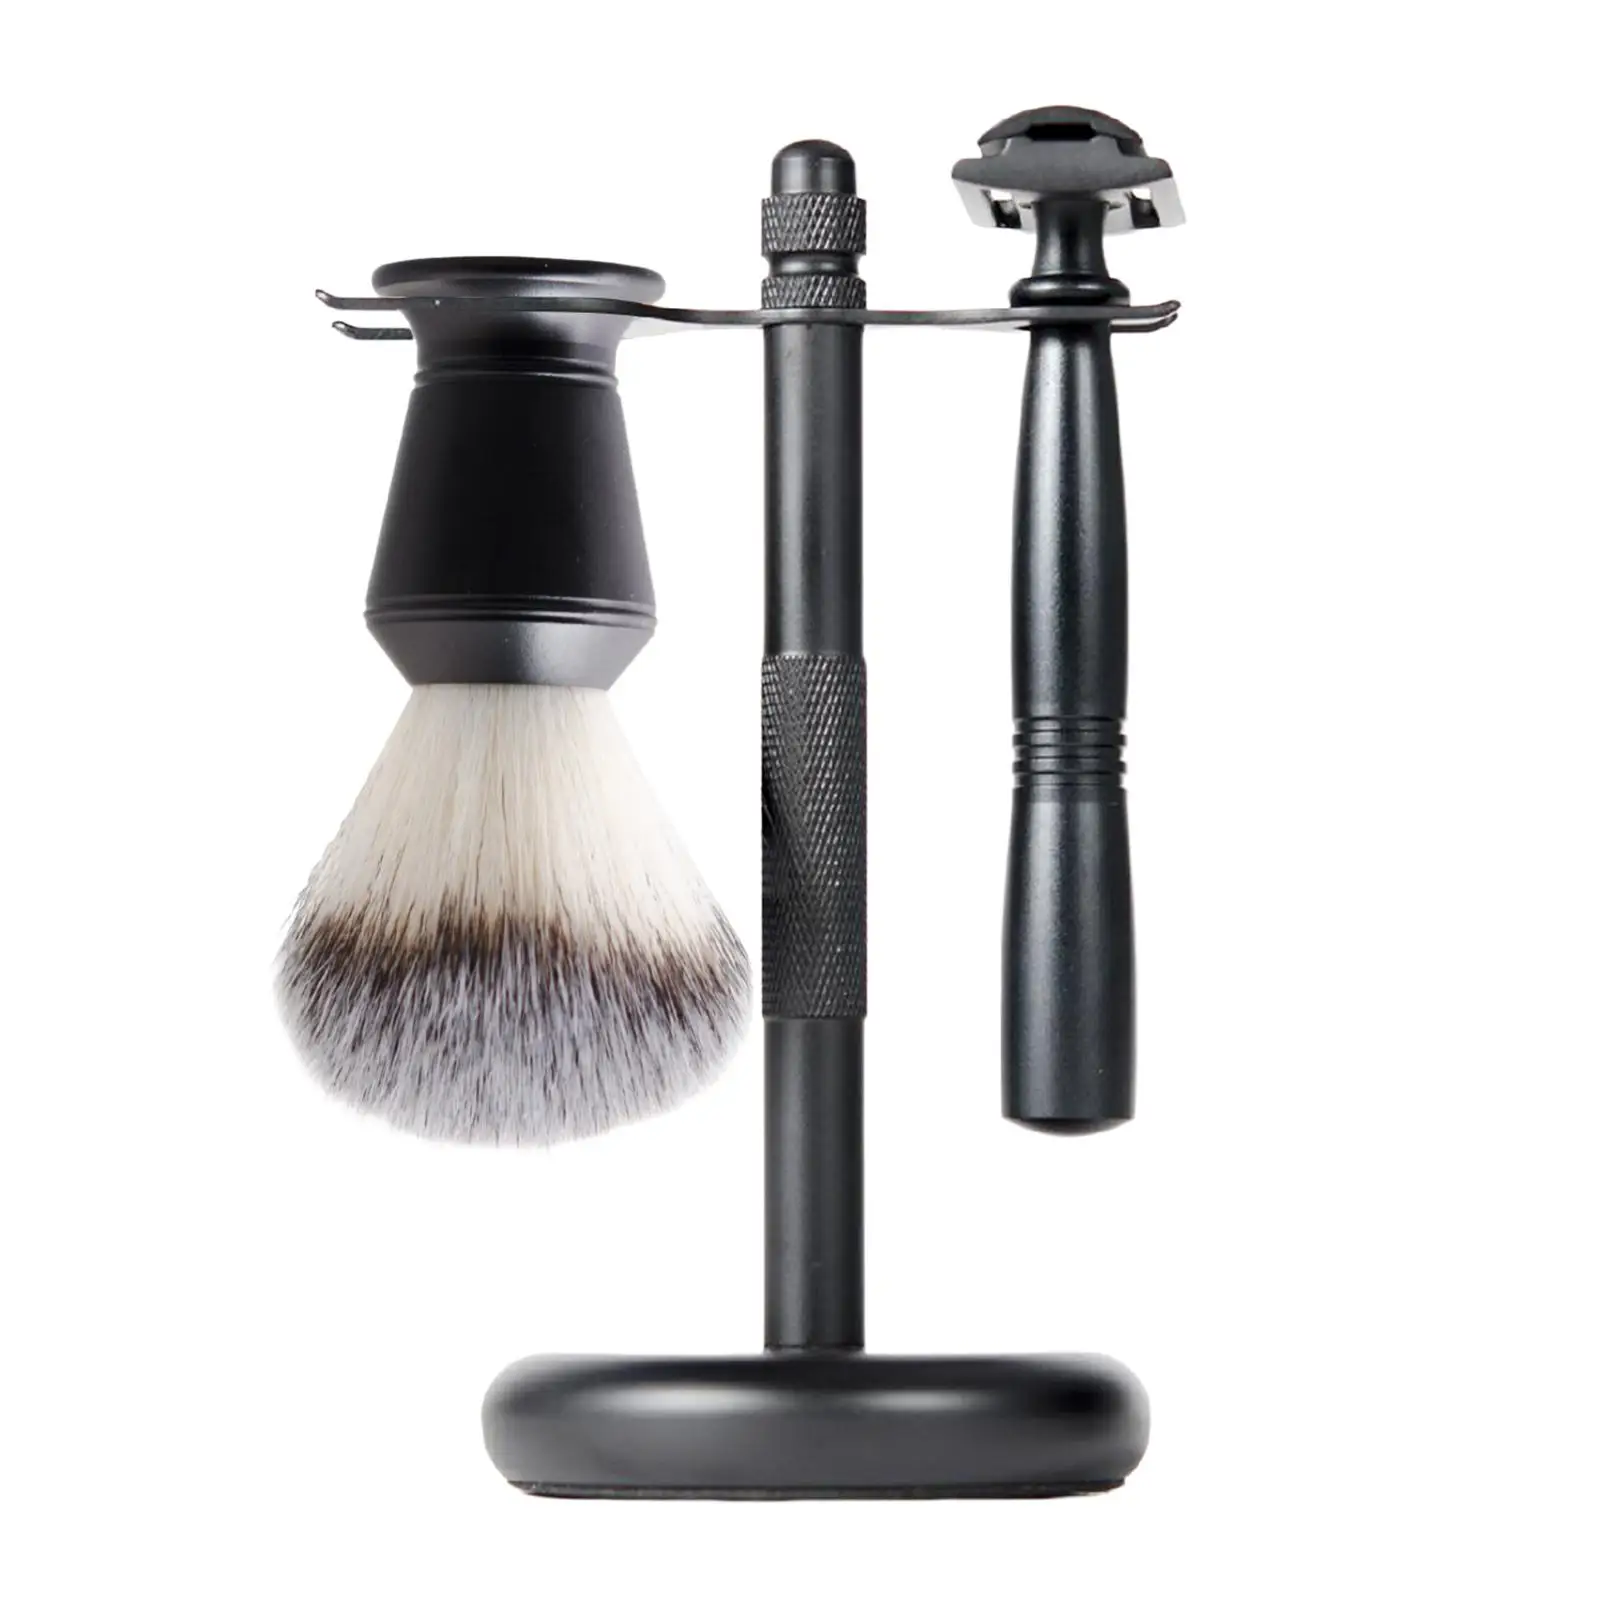 3 Pieces Shaving Kit Black Razor Shaving Kit Includes Edge Razor, Holder, Shaving Brush for Dad Boyfriend Shave Accessory